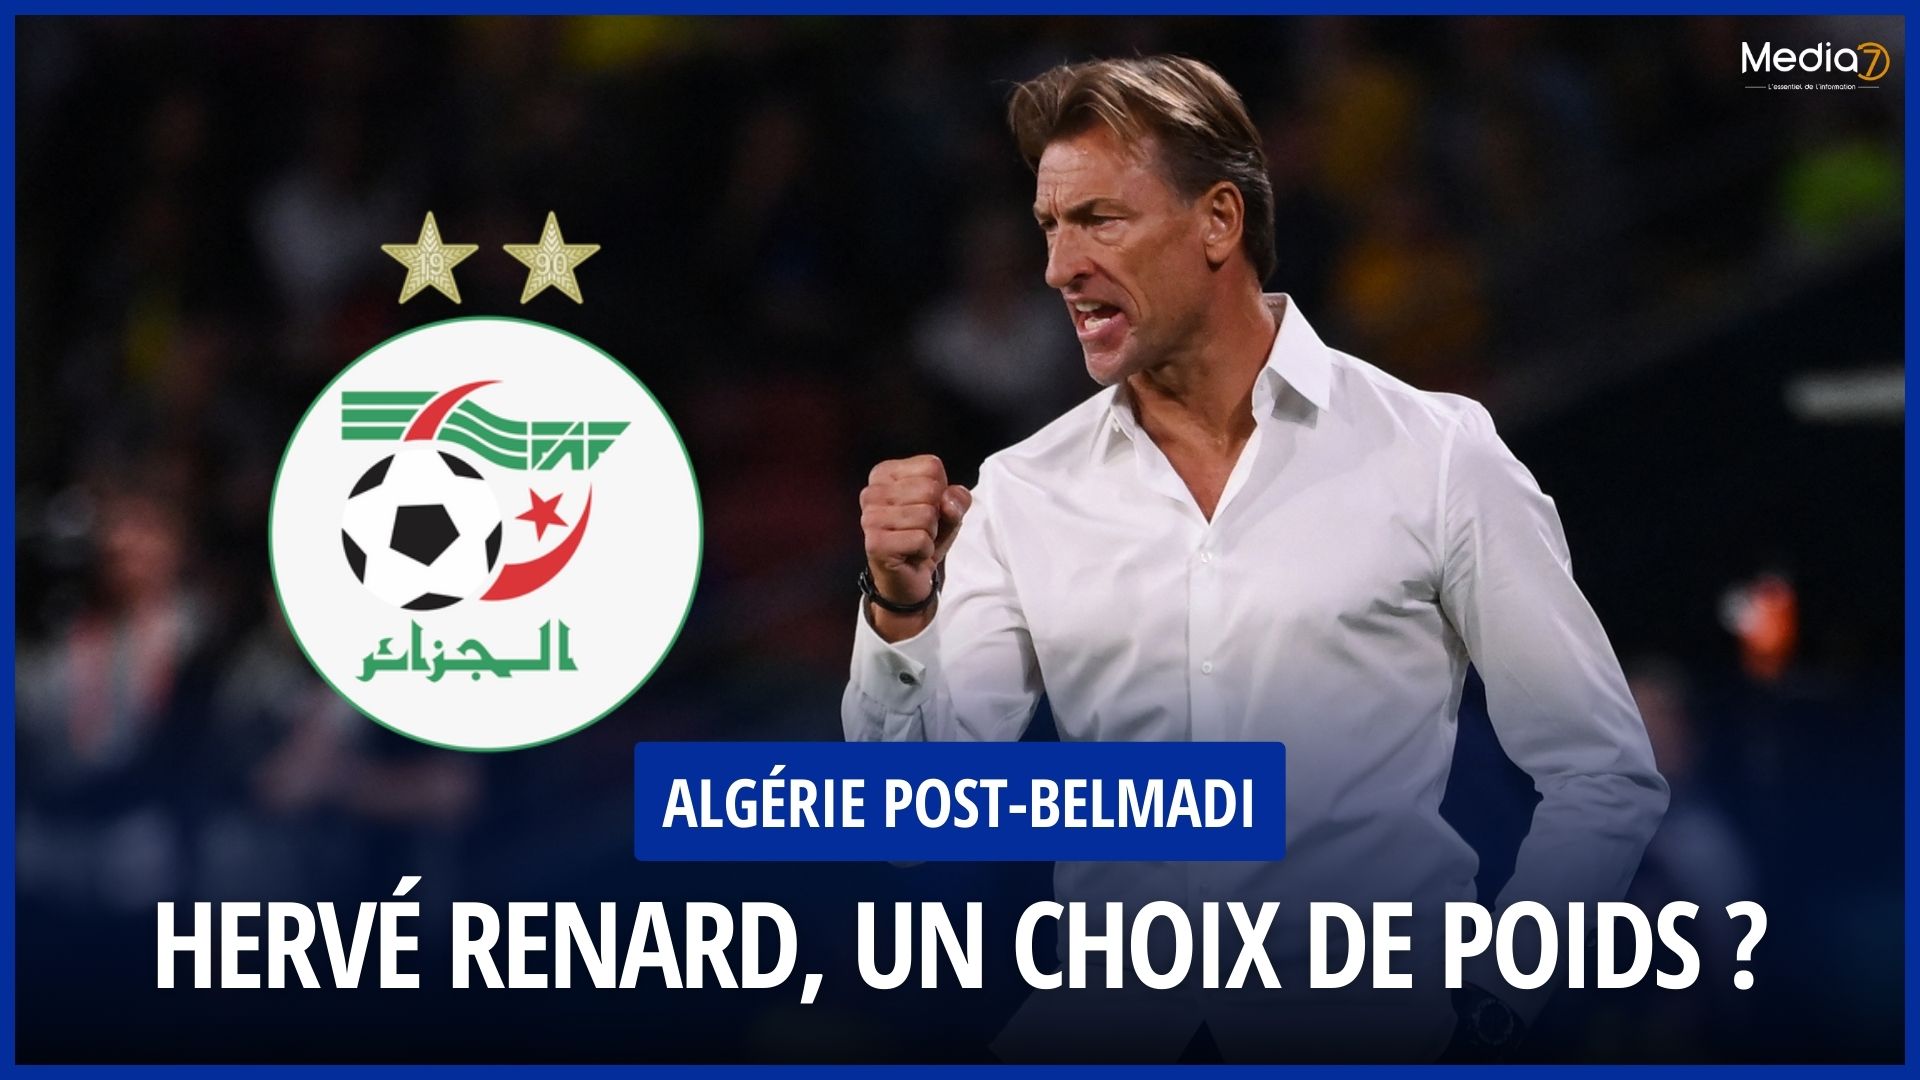 Algeria Post-Belmadi: Hervé Renard, a strong choice? - Media7